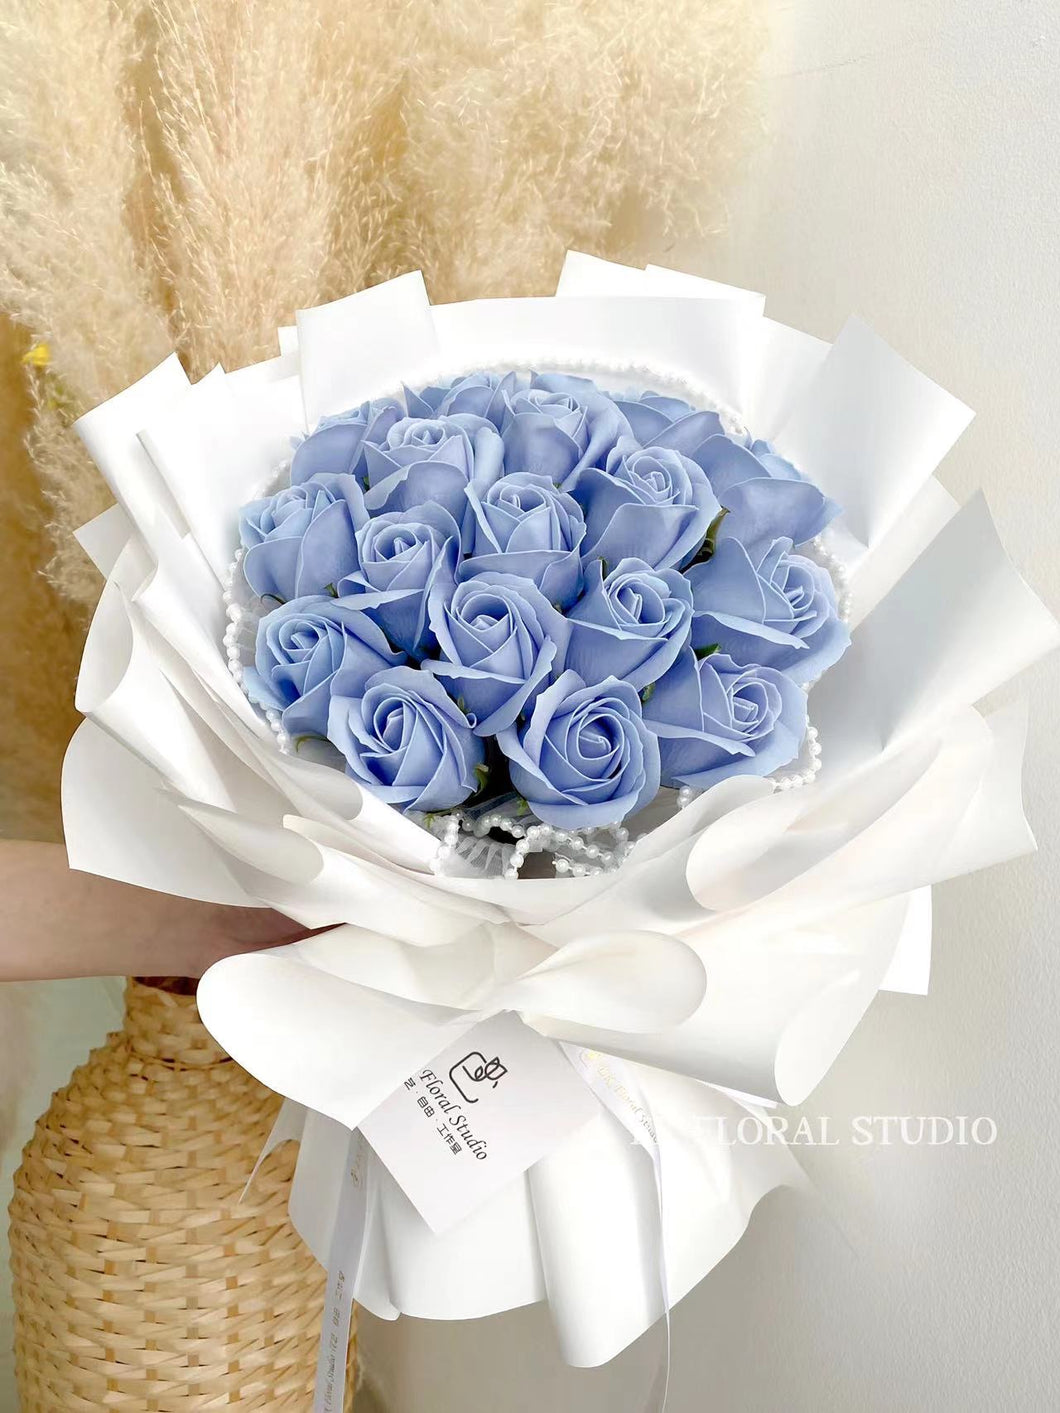 White-ish Blue Soap Rose Bouquet白色系雾面蓝香皂玫瑰花束